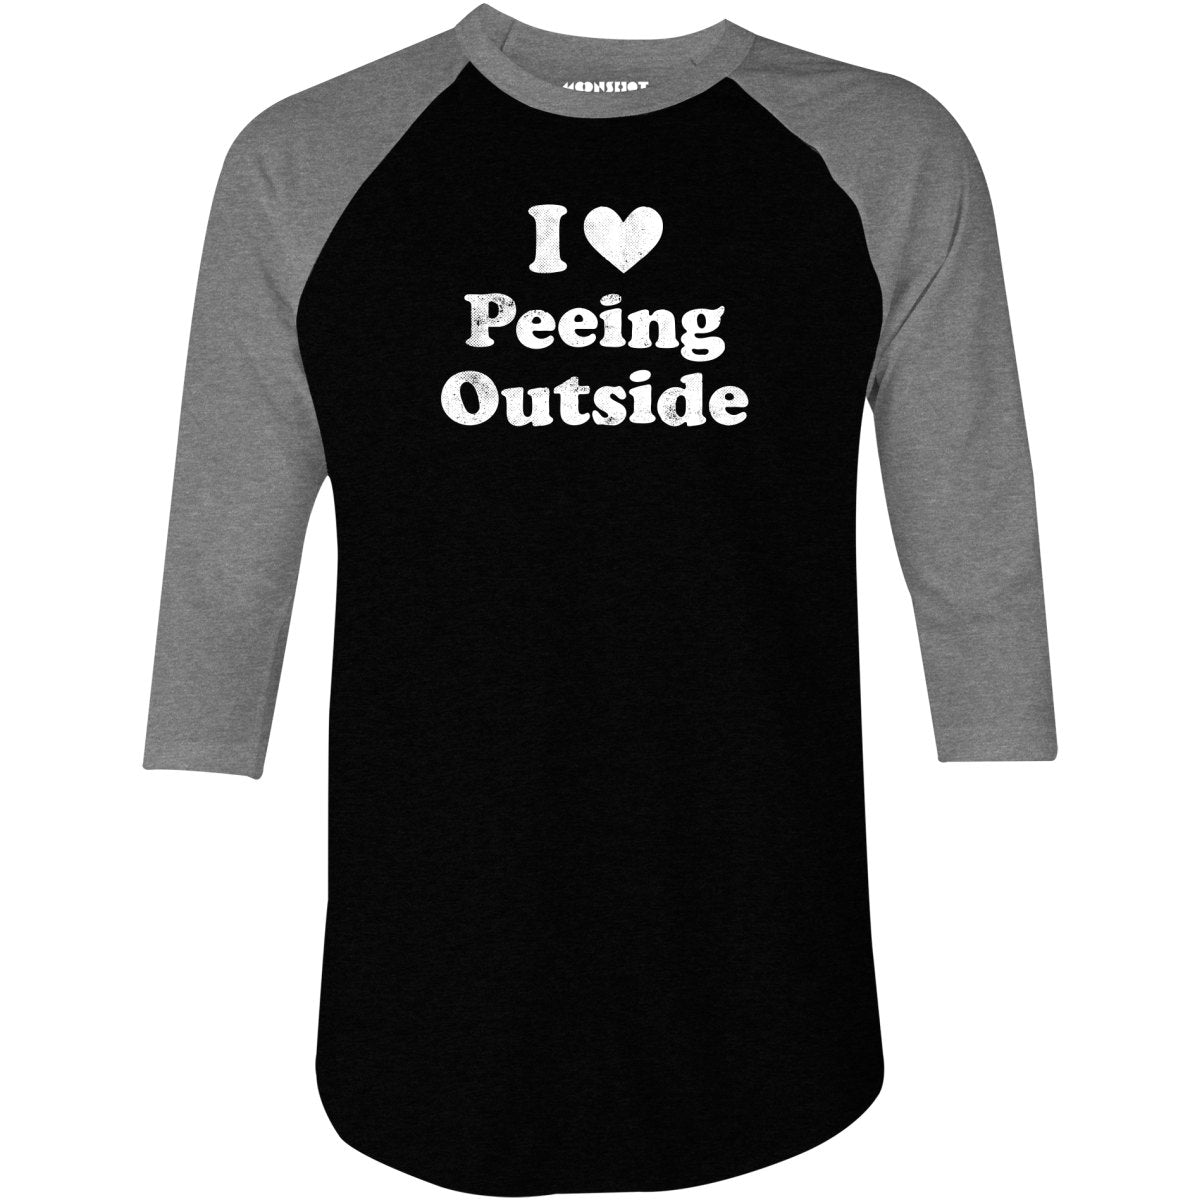 I Love Peeing Outside - 3/4 Sleeve Raglan T-Shirt